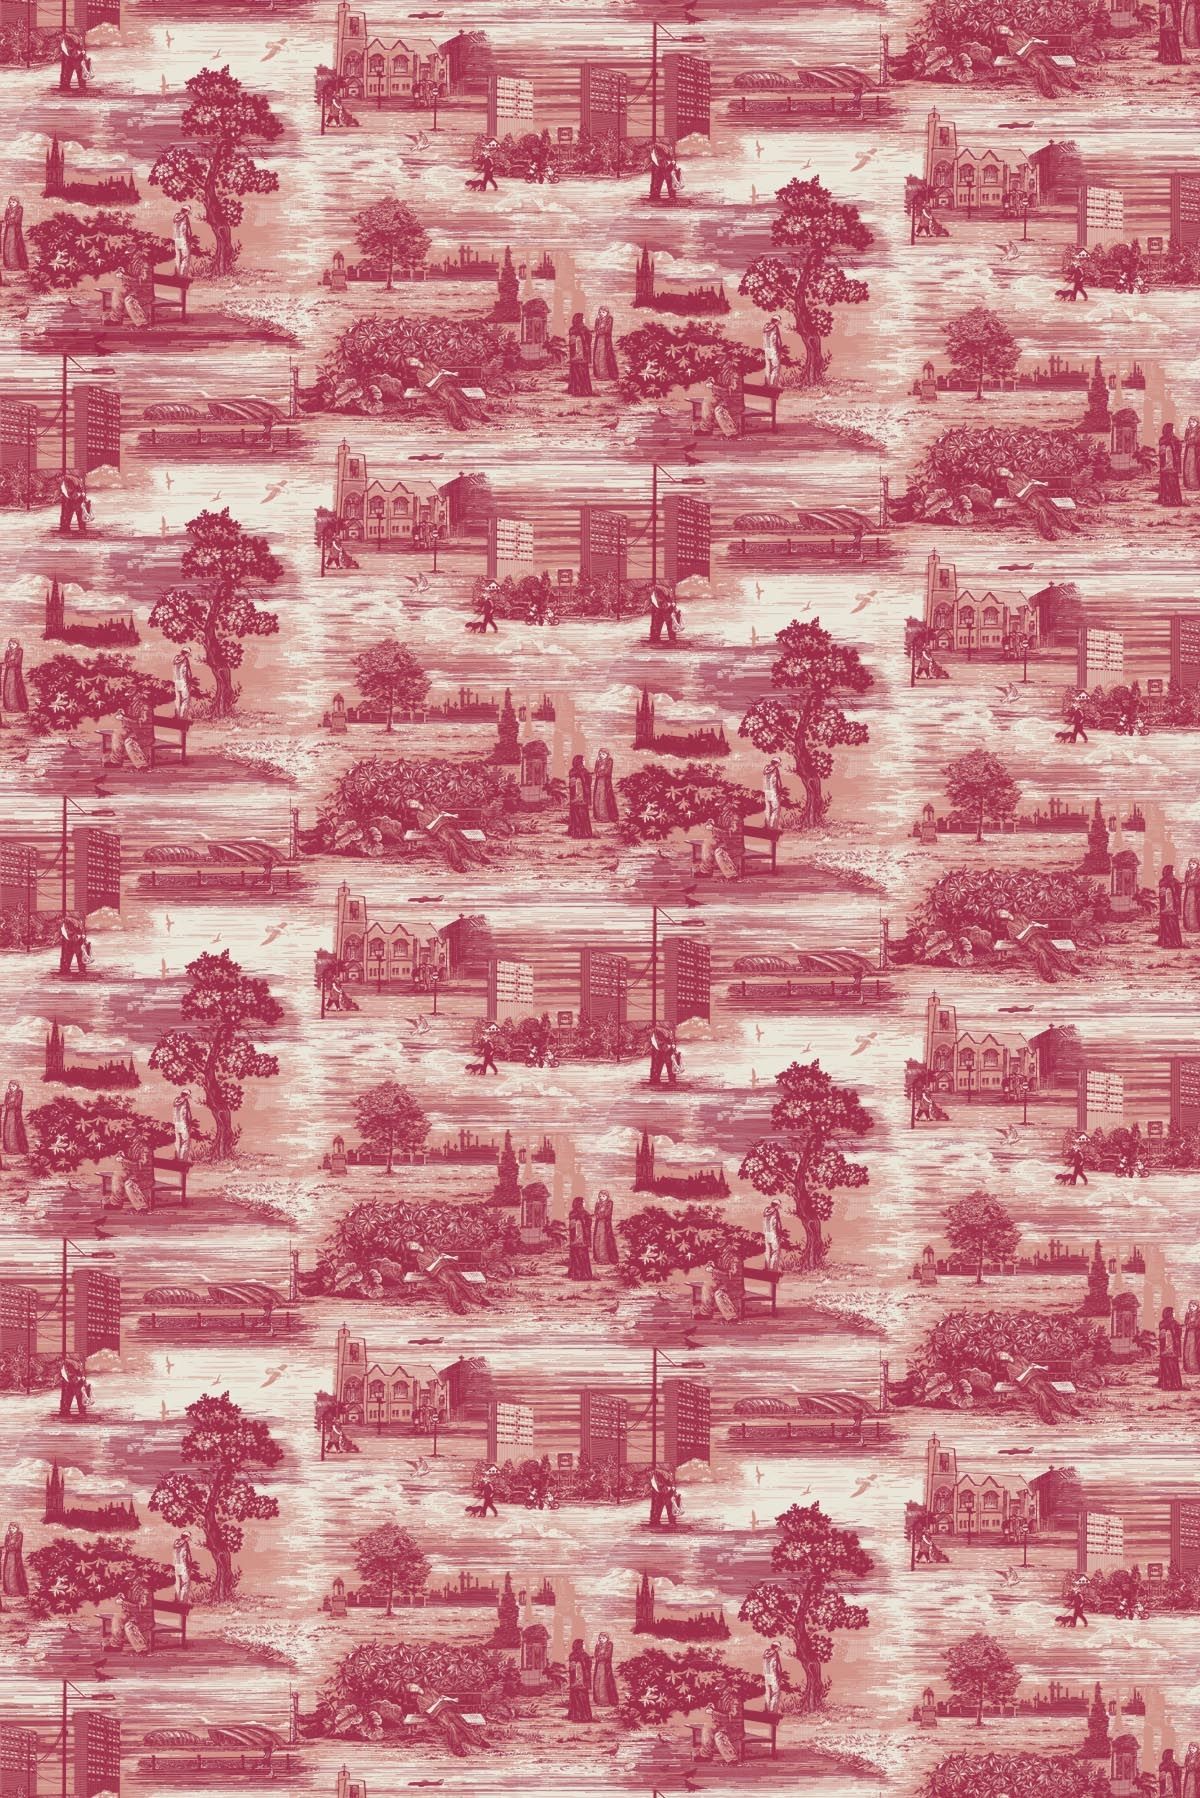 libby's wallpaper,pink,red,purple,pattern,brick